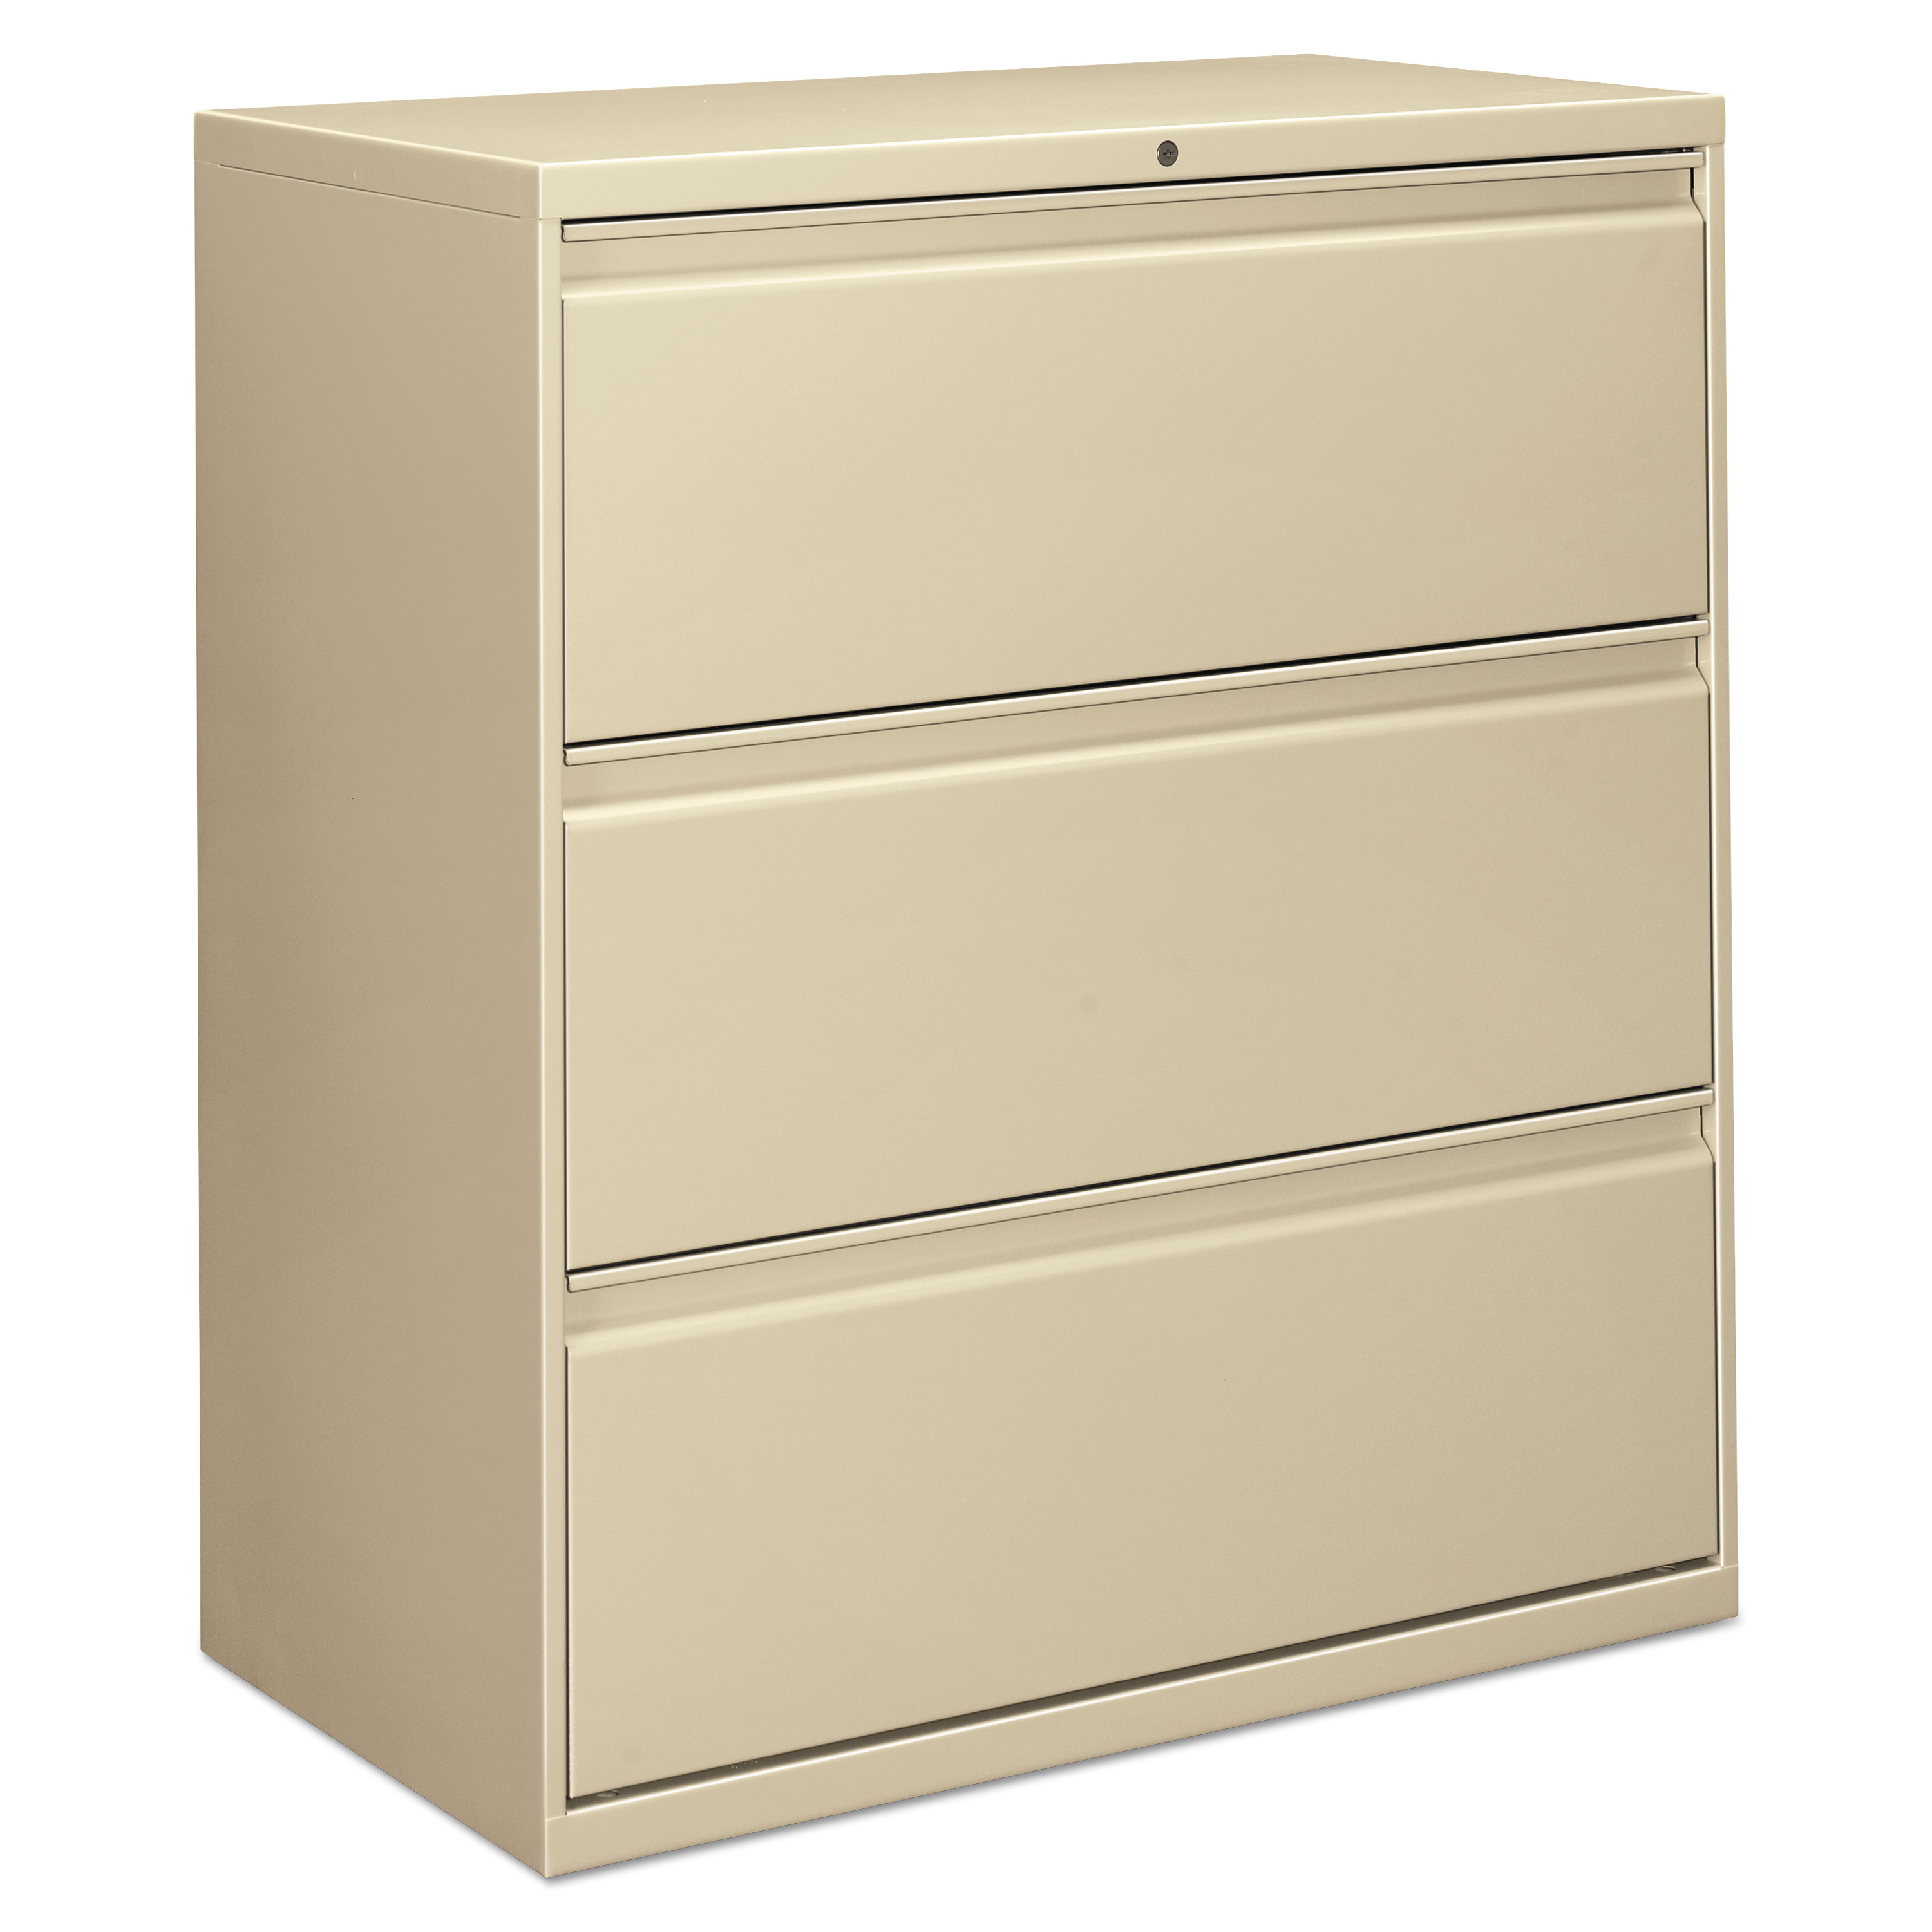  Alera ALELF3641PY Three-Drawer Lateral File Cabinet, 36w x 18d x 39.5h, Putty (ALELF3641PY) 